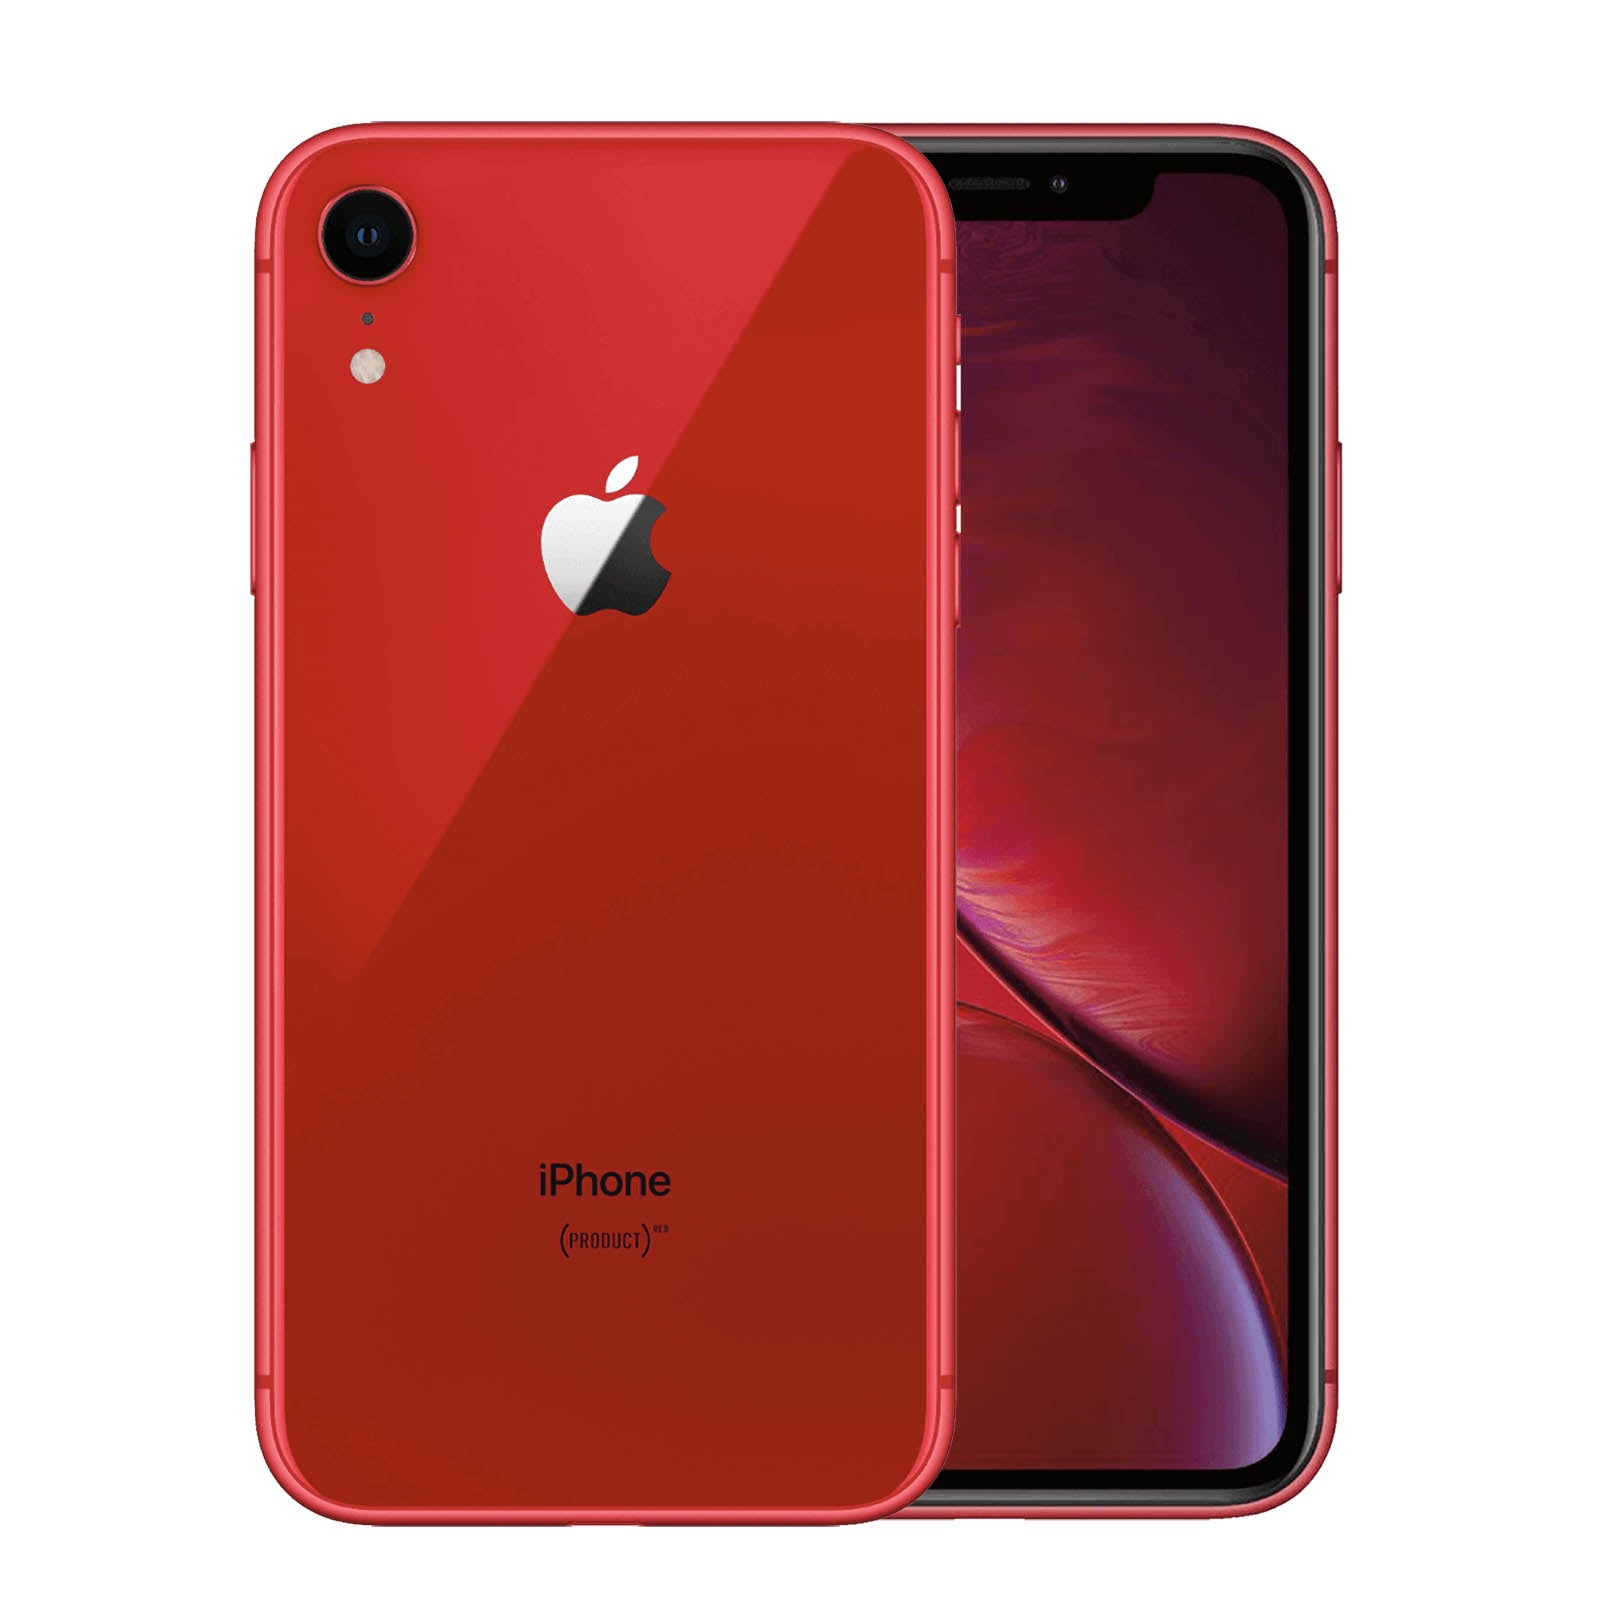 Apple iPhone XR 64GB Product Red Razonable - Desbloqueado